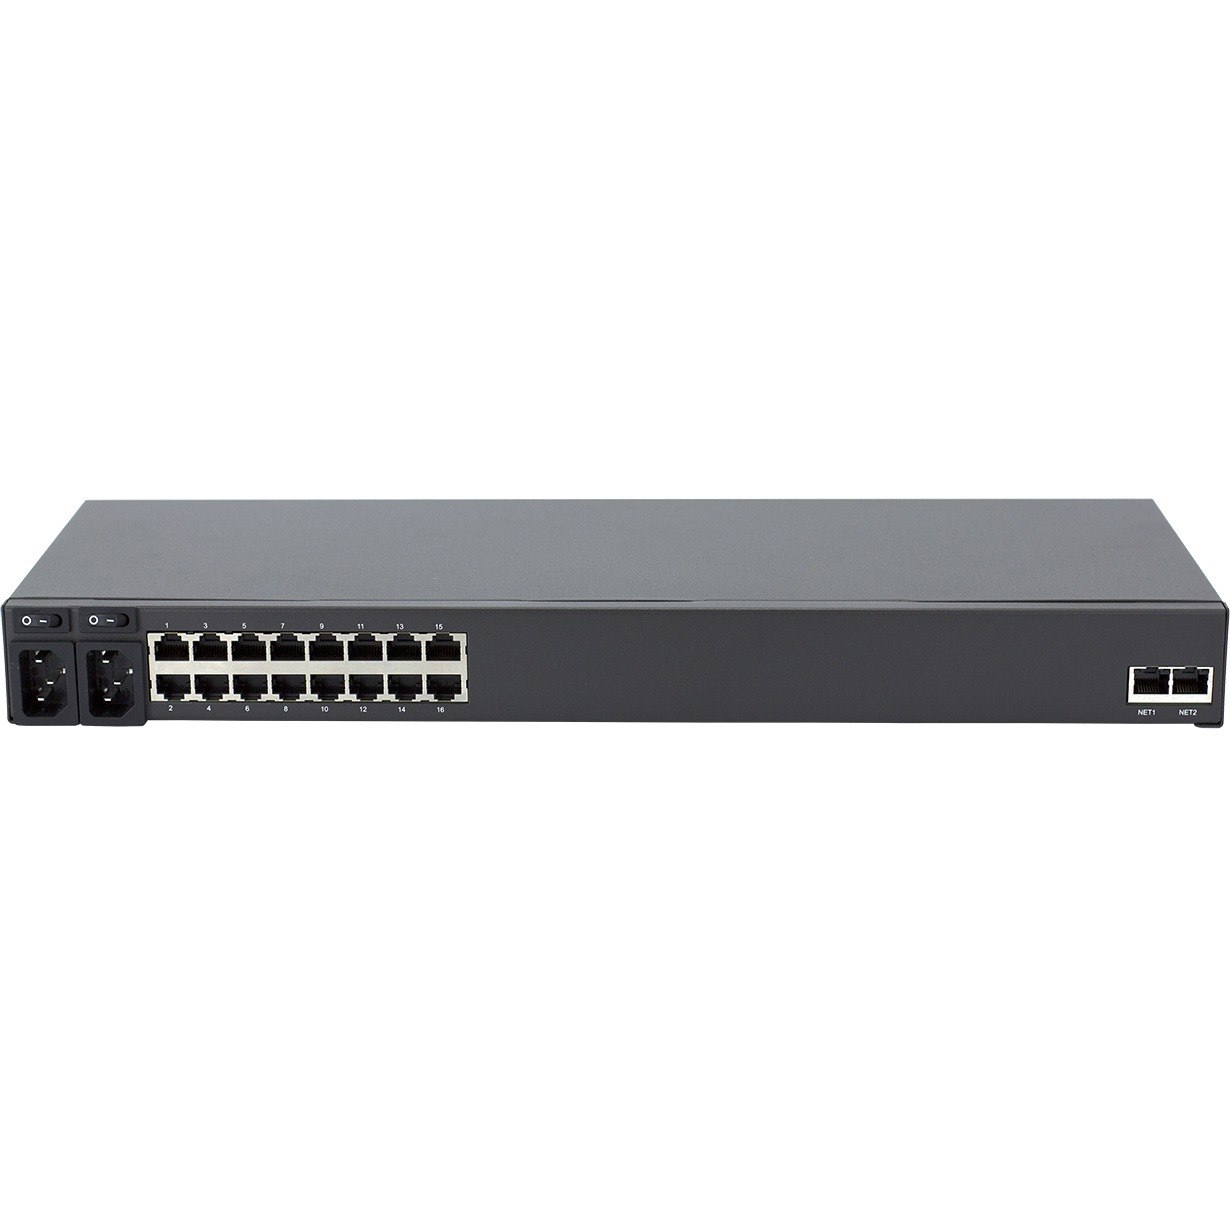 Opengear CM7116-2-DAC-CN Terminal Server